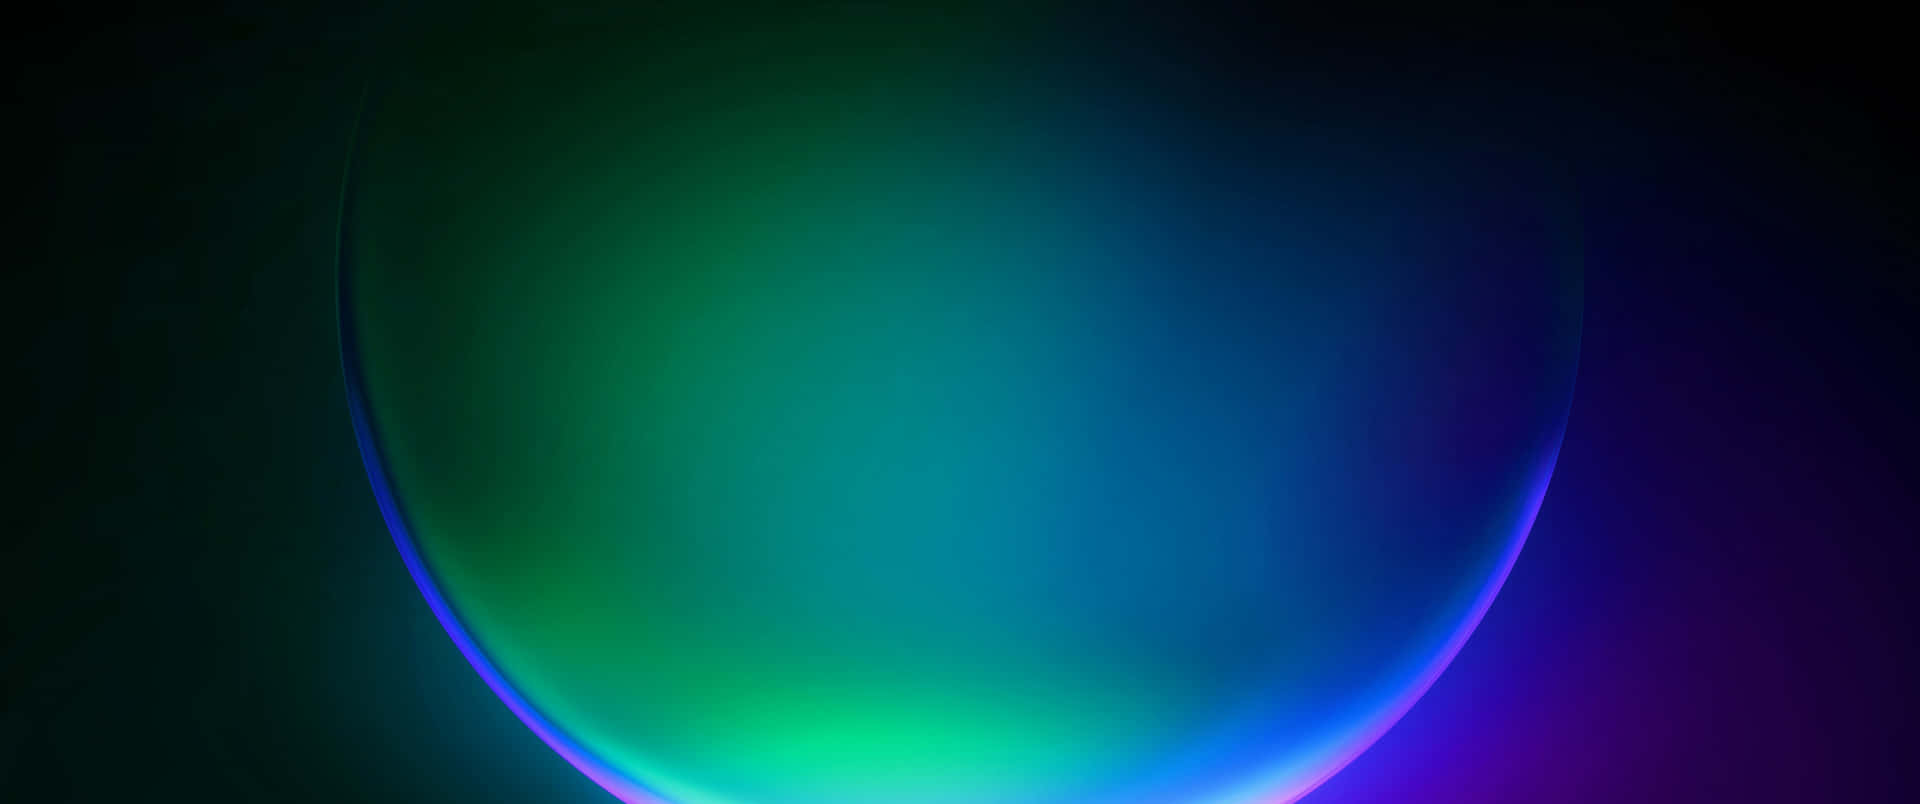 3440x1440p Blue Green Bubble Background